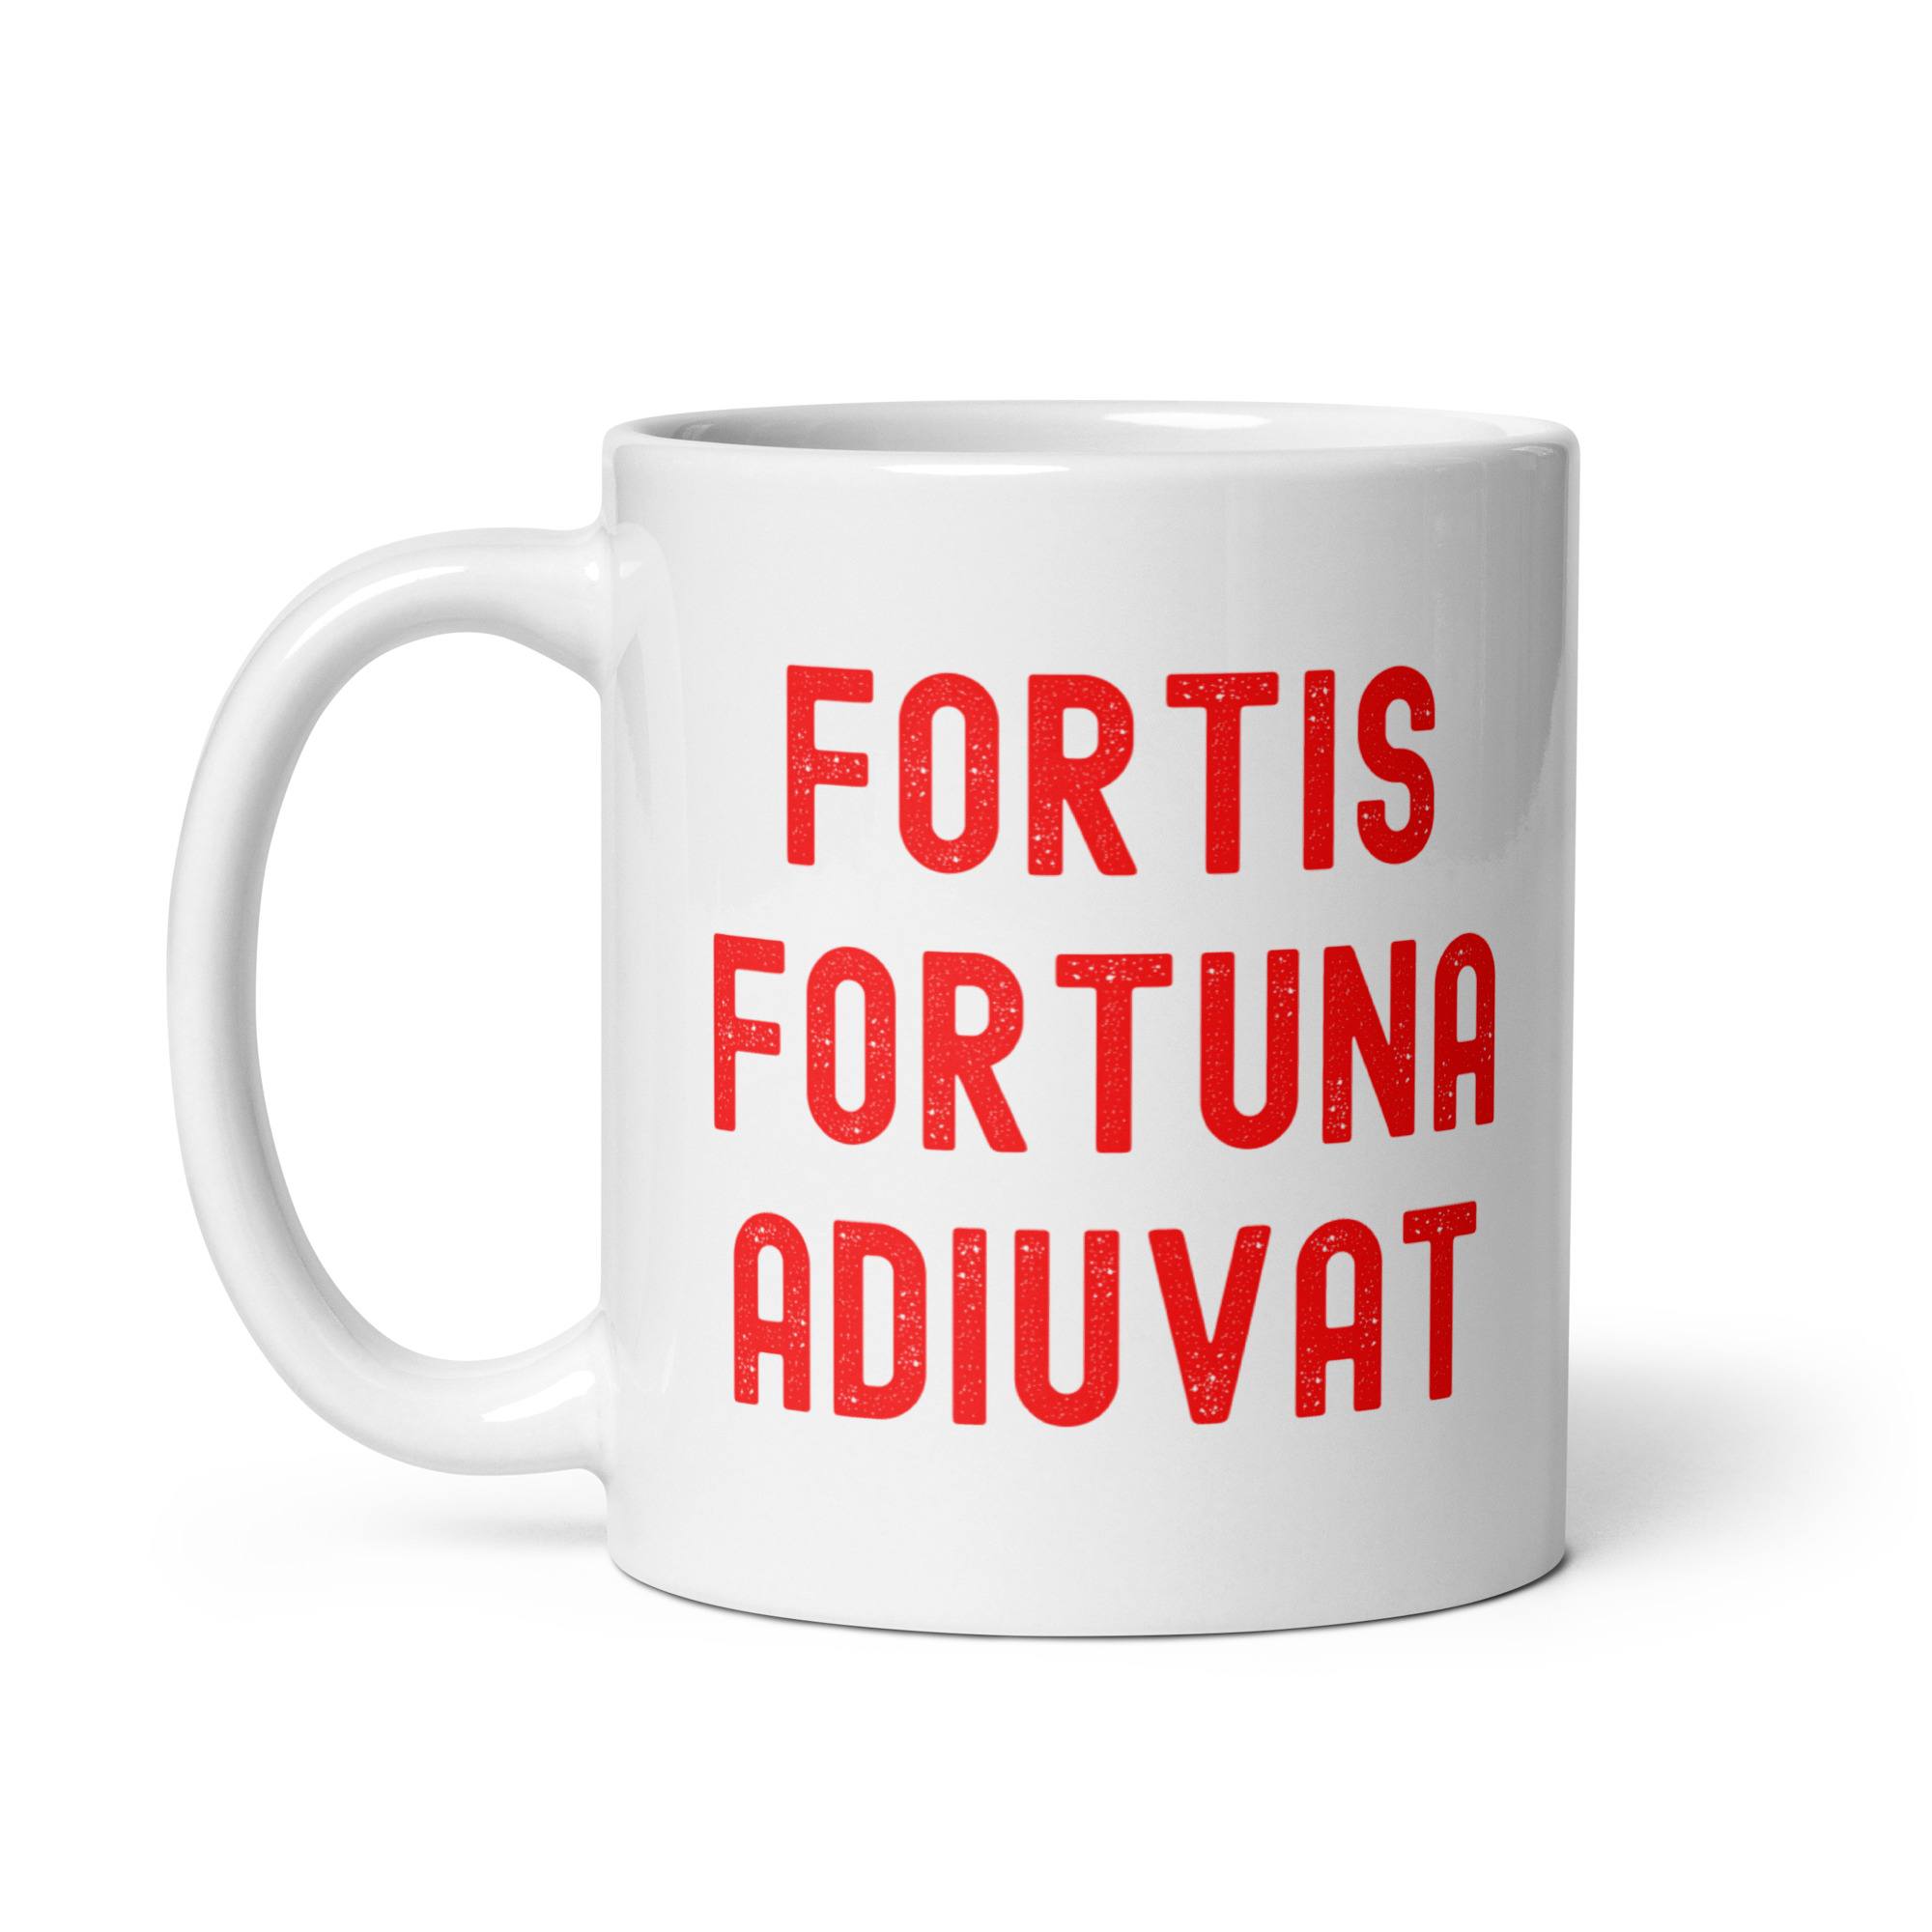 Fortis Fortuna Adiuvat - Latin proverb' Mug